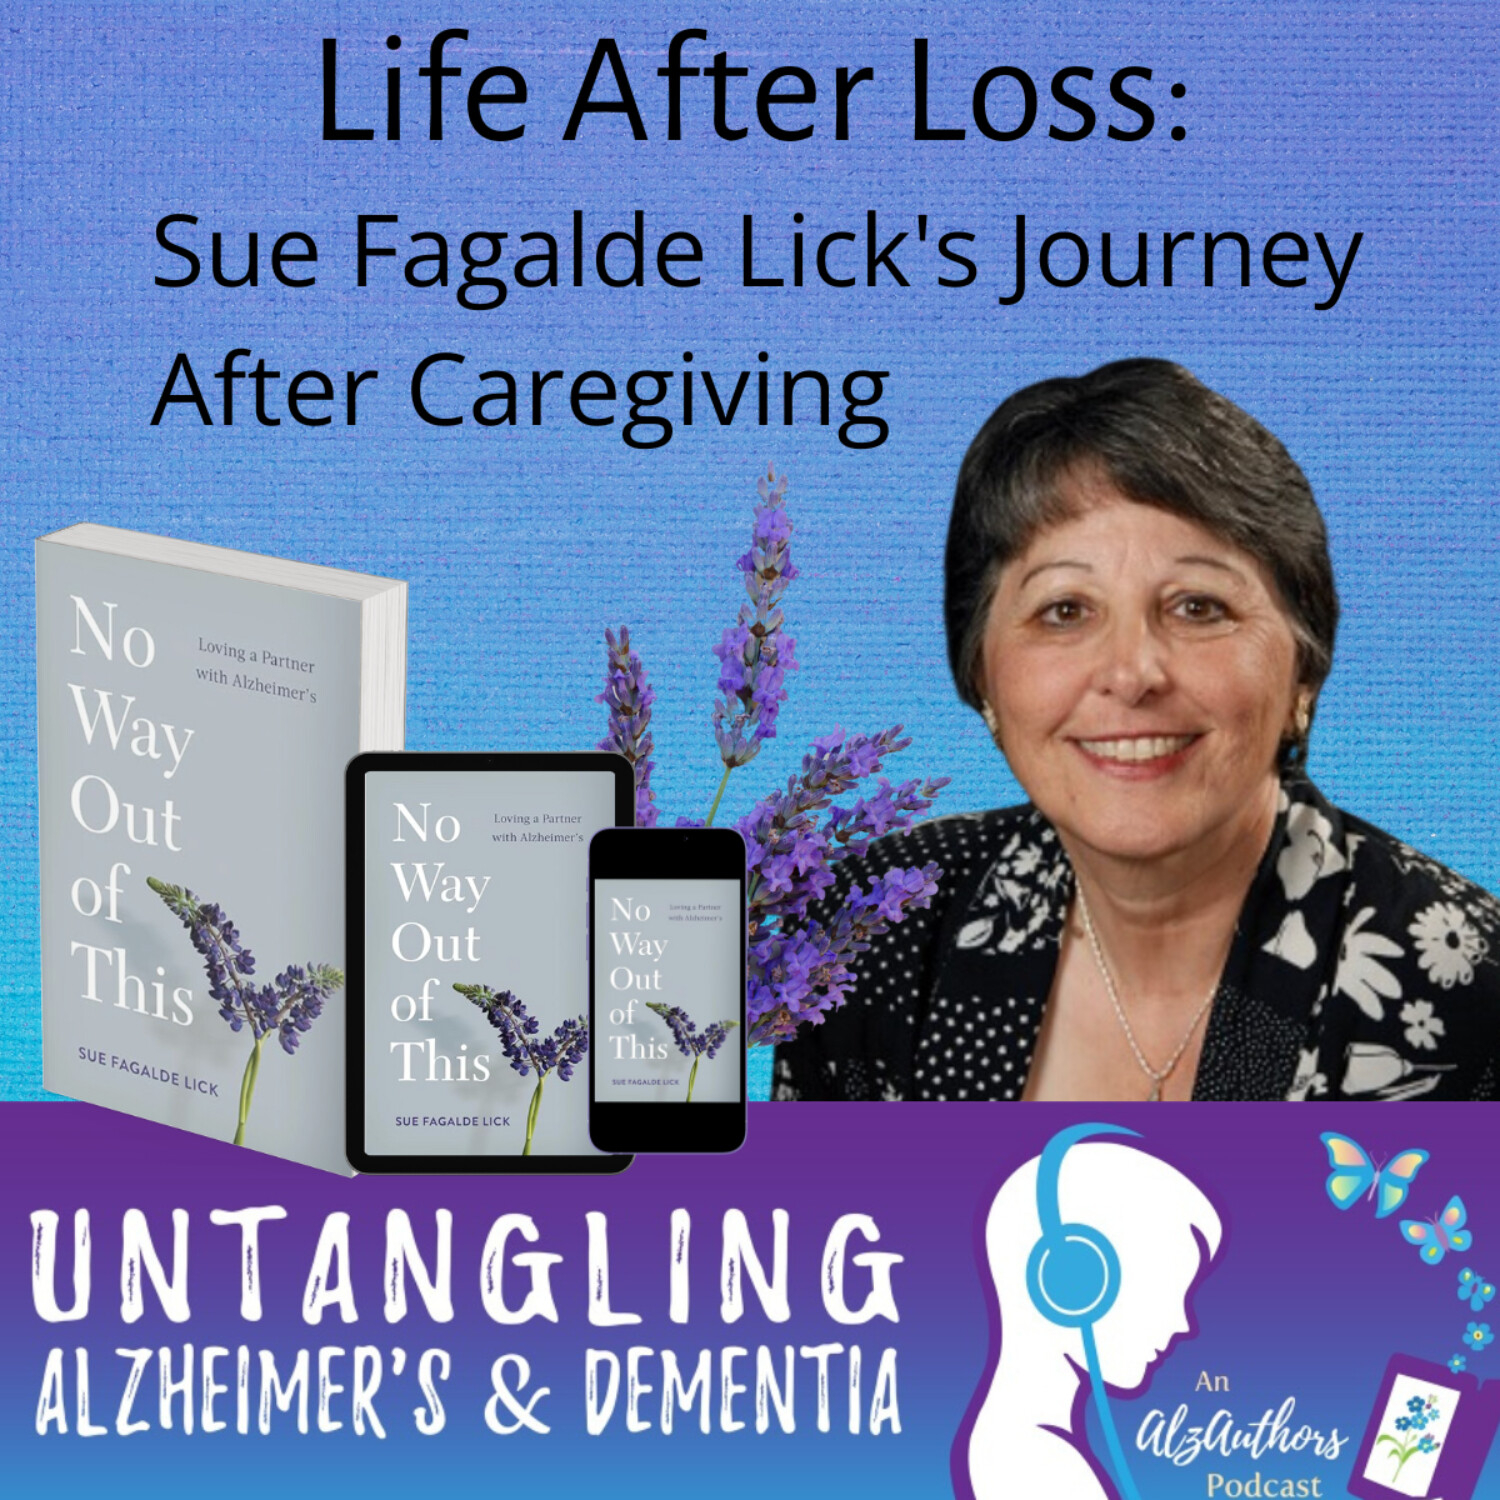 Life After Loss: Sue Fagalde Lick’s Journey After Caregiving